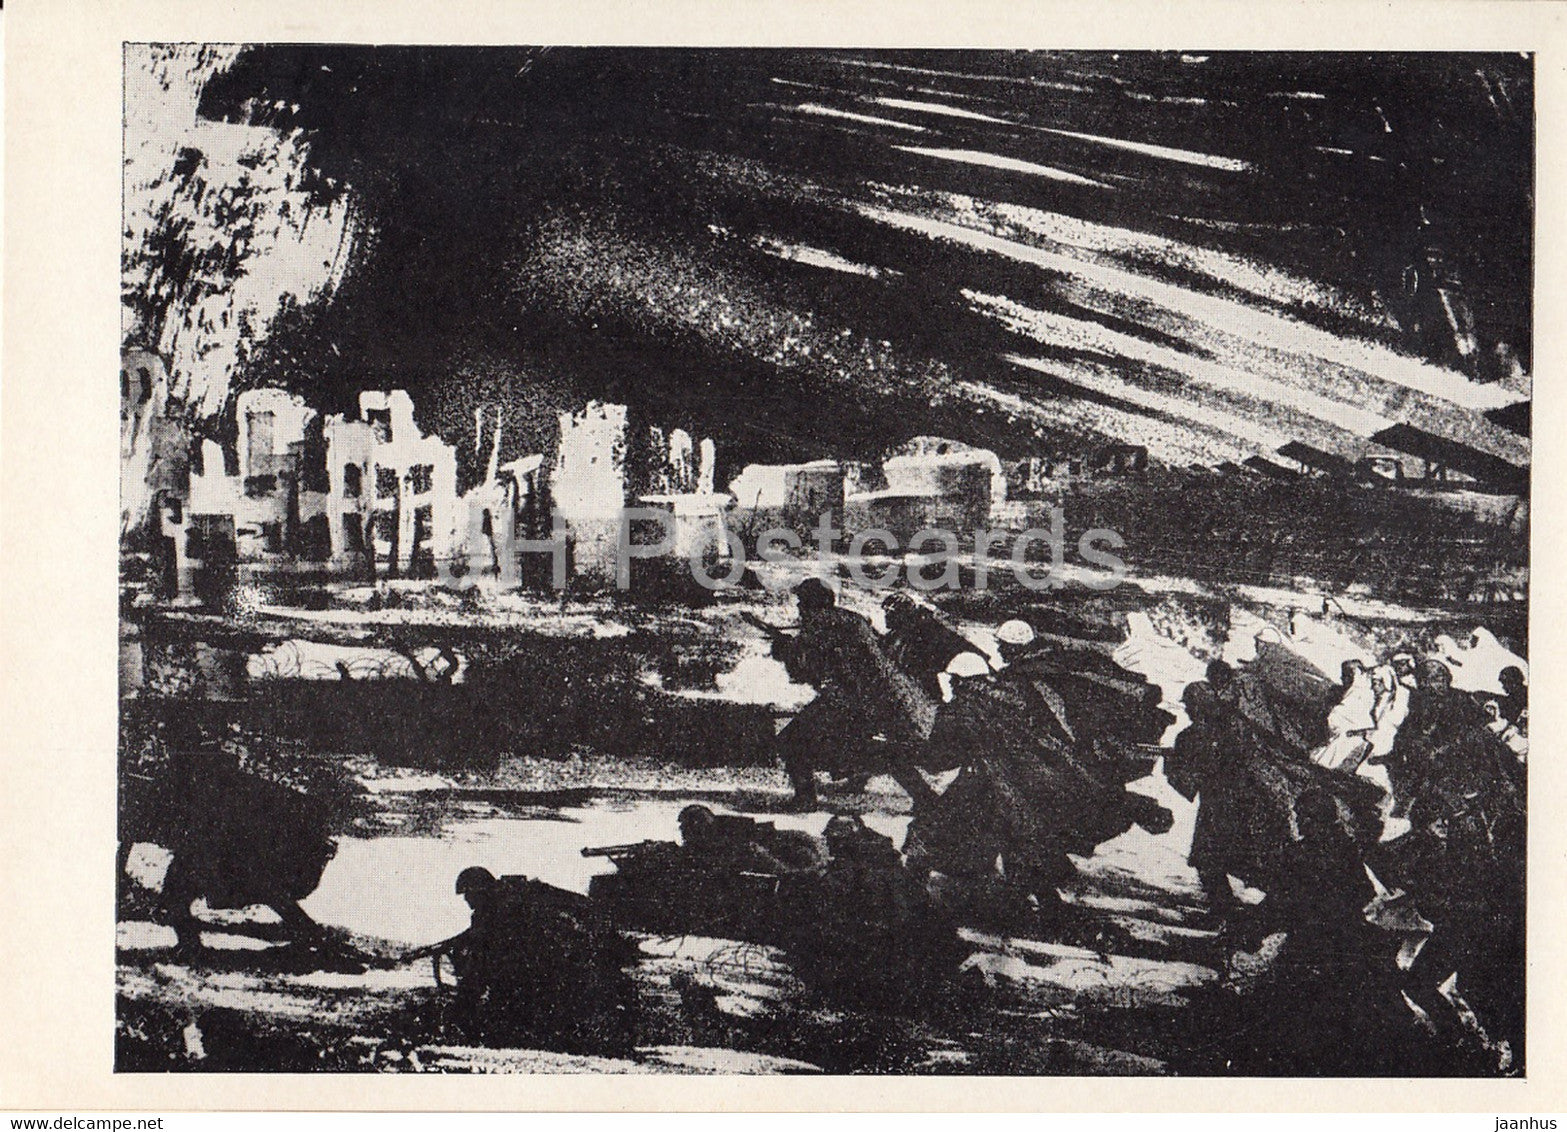 Guarding the World - painting by E. Okas - Battle in Velikiye Luki - military - art - 1965 - Russia USSR - unused - JH Postcards